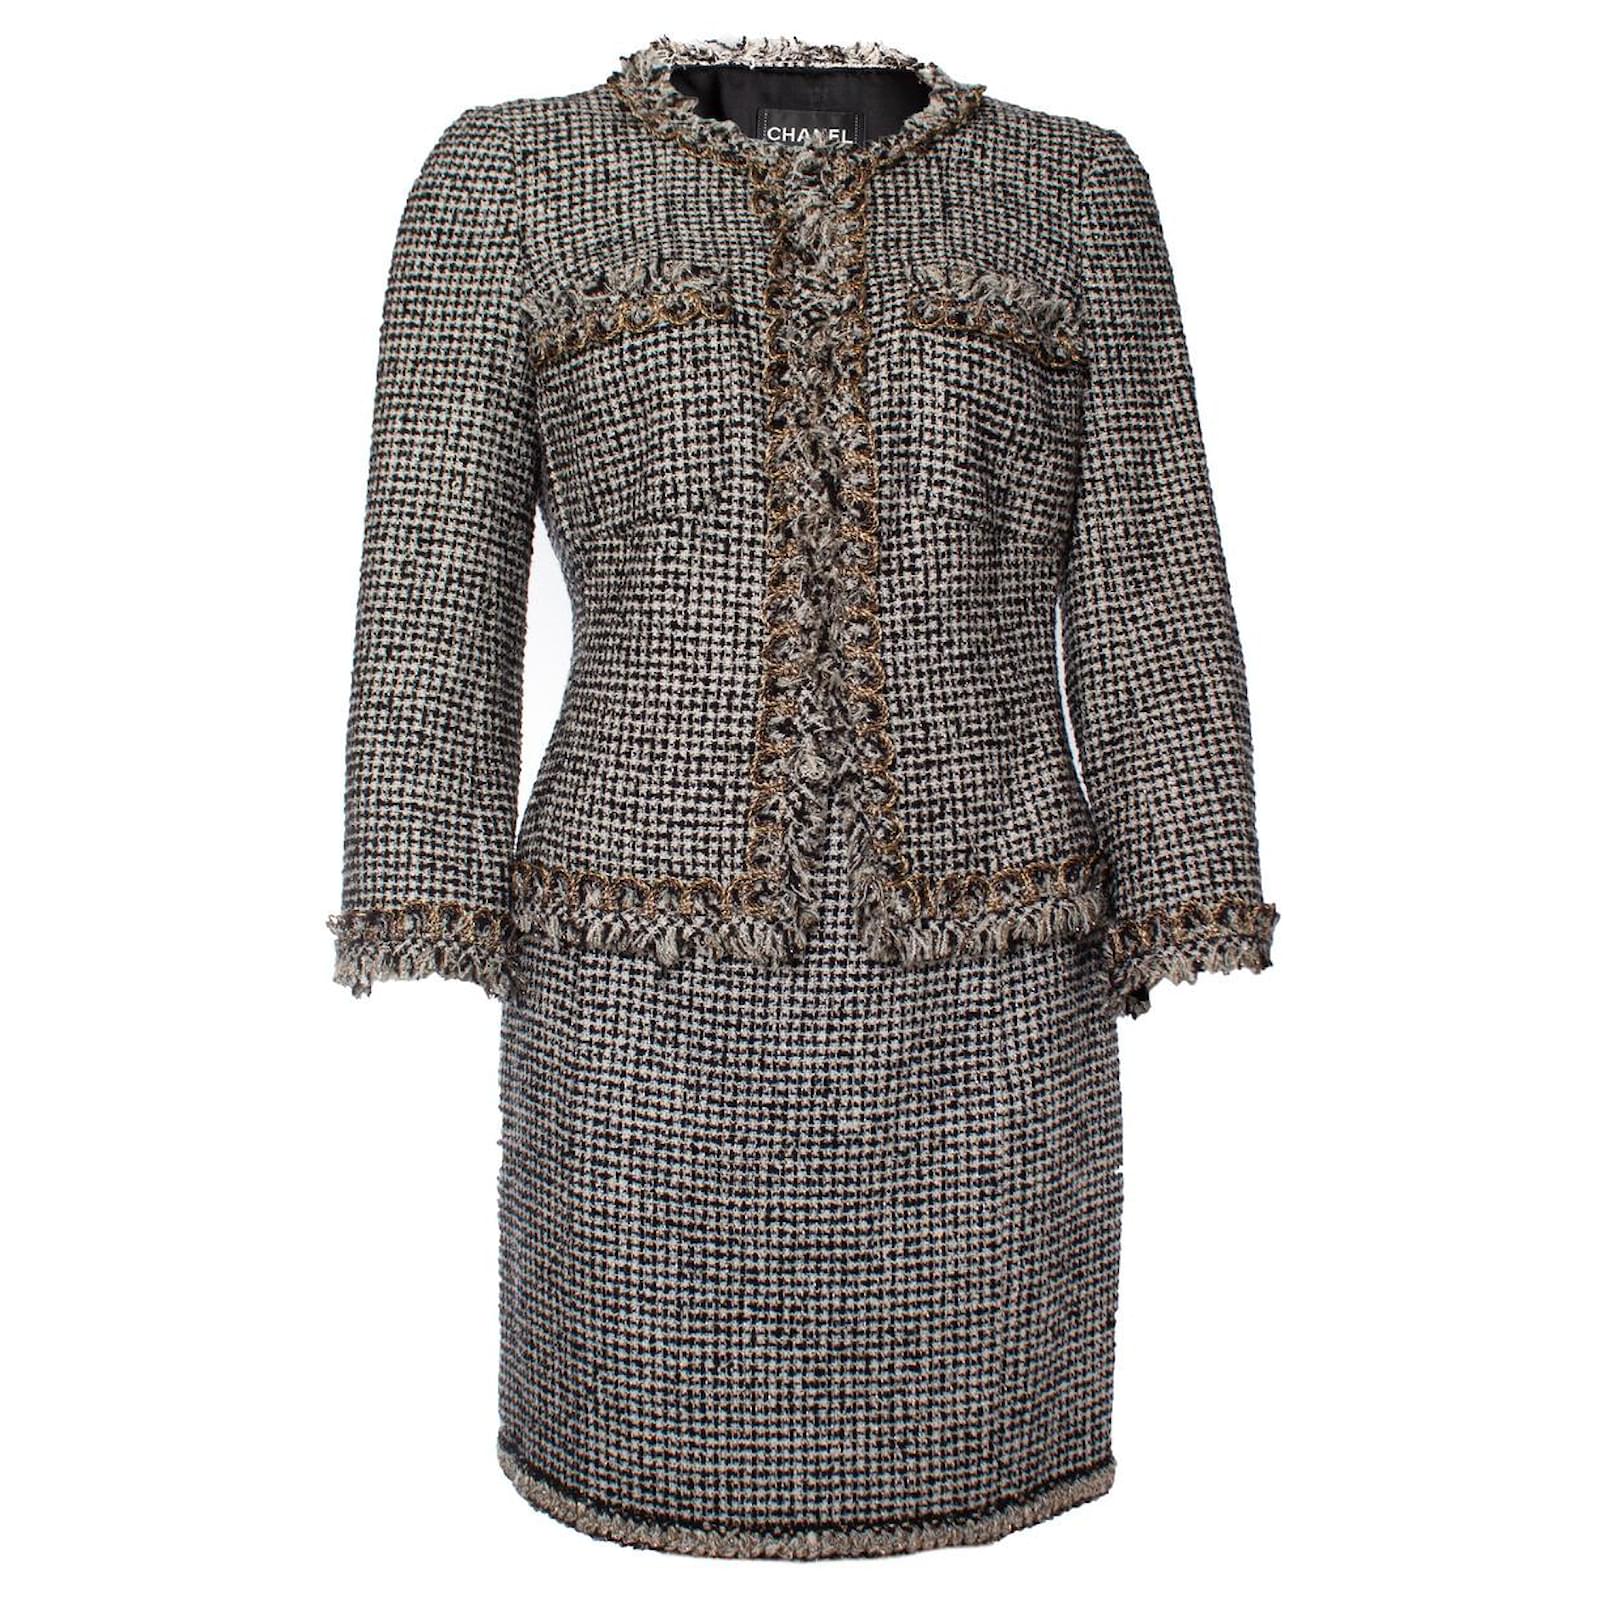 Vintage Chanel black-white tweed wool coat with zipper details.